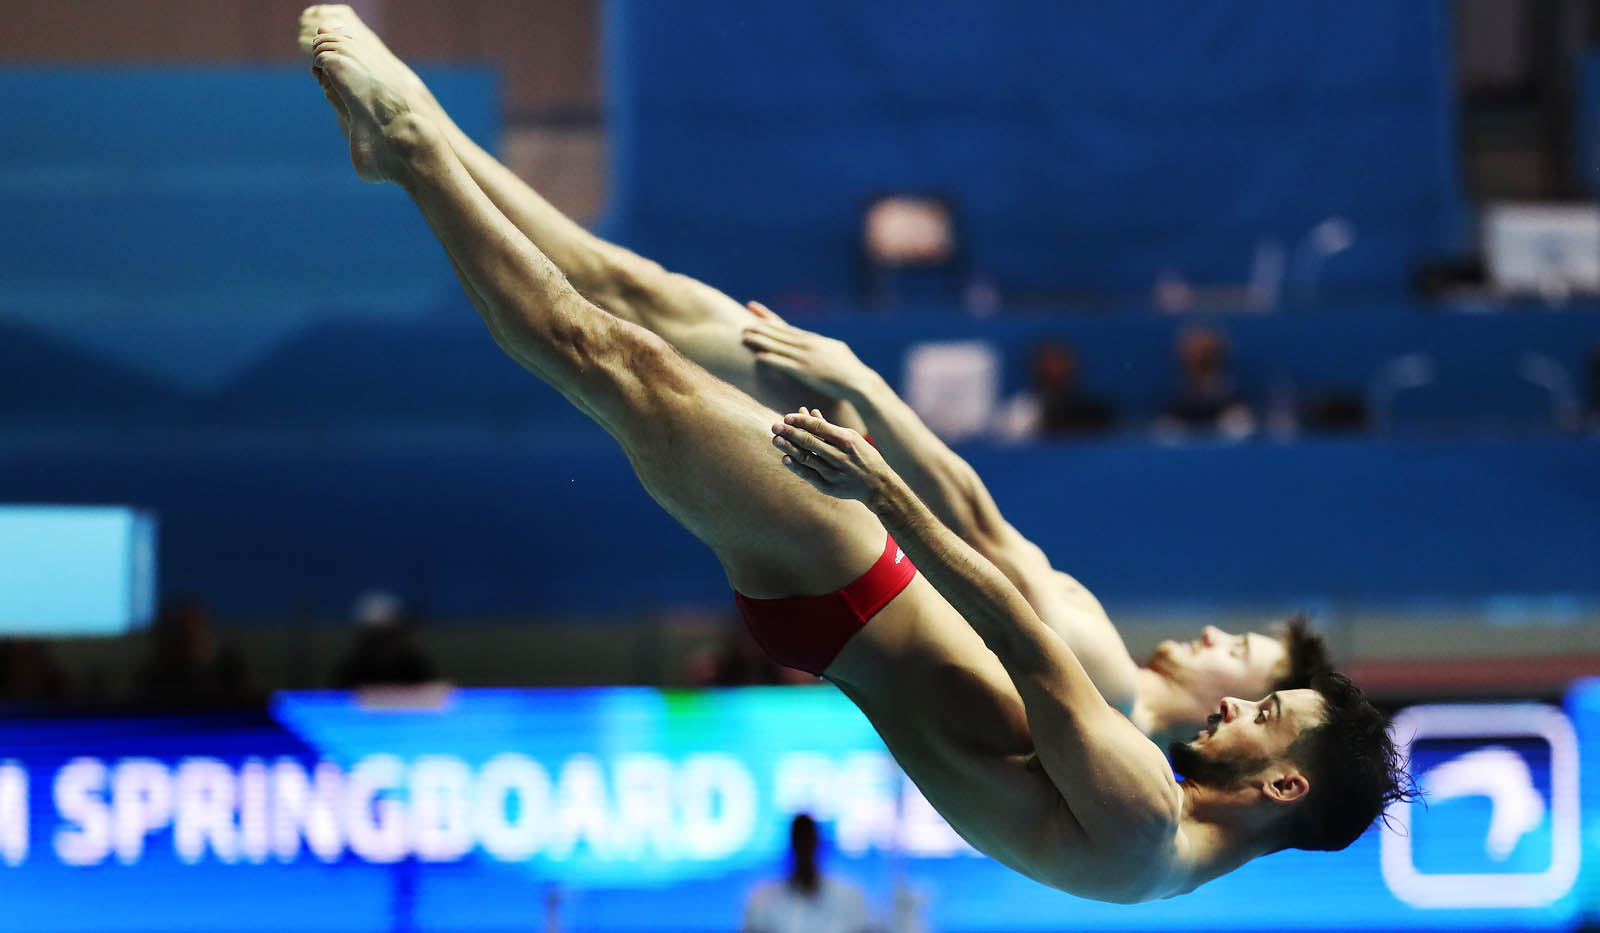 Gwangju: Canadian diving team overcomes men’s 3m synchro mishap